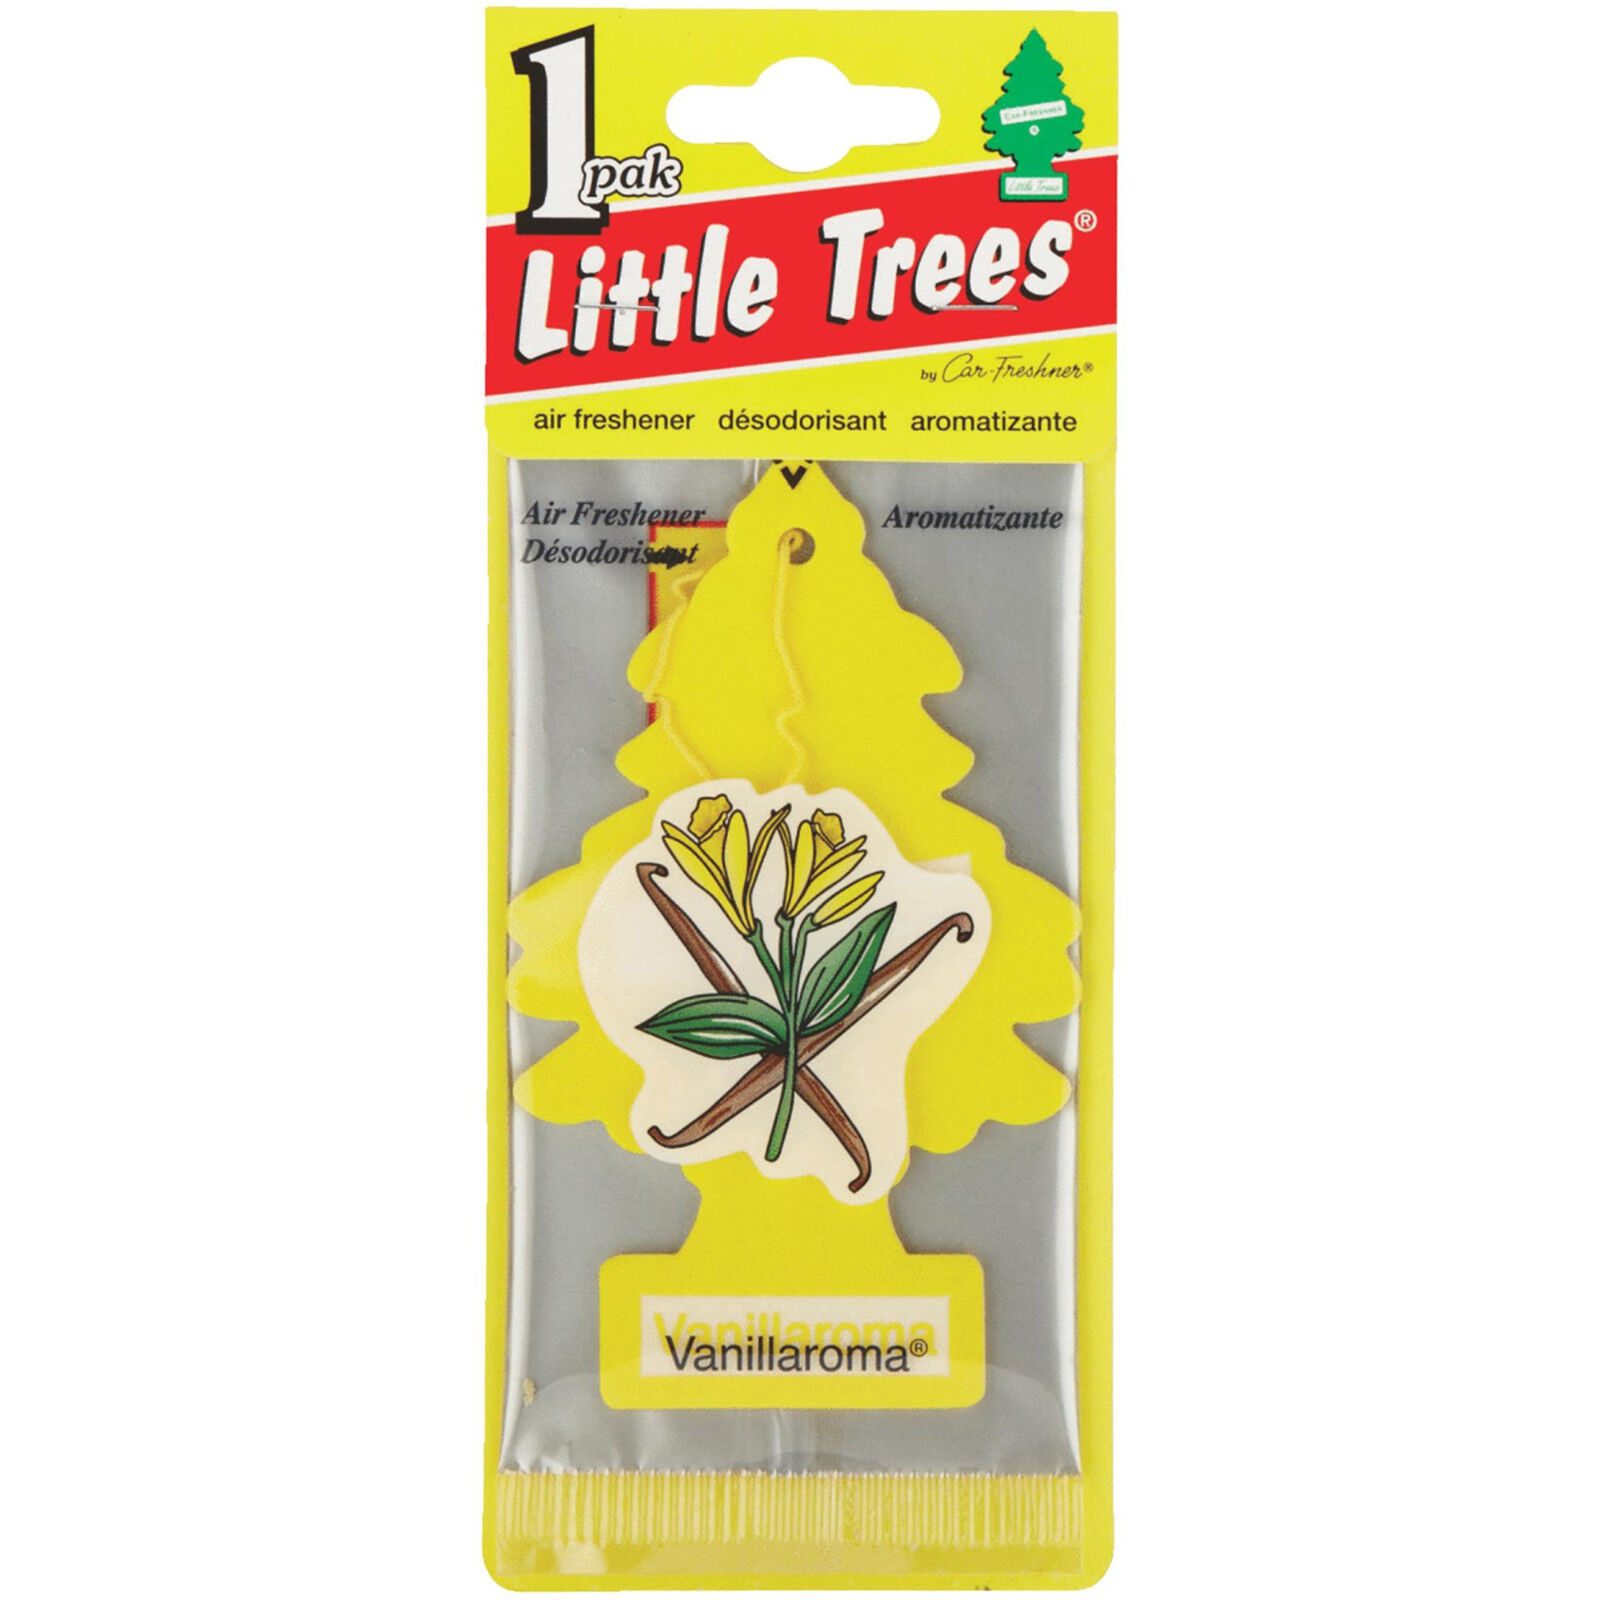  Freshener Vanillaroma  10105 Little Tree Vanilla Aroma  MADE IN USA Pack (24)  Little Trees U1P-10105 - фотография #2